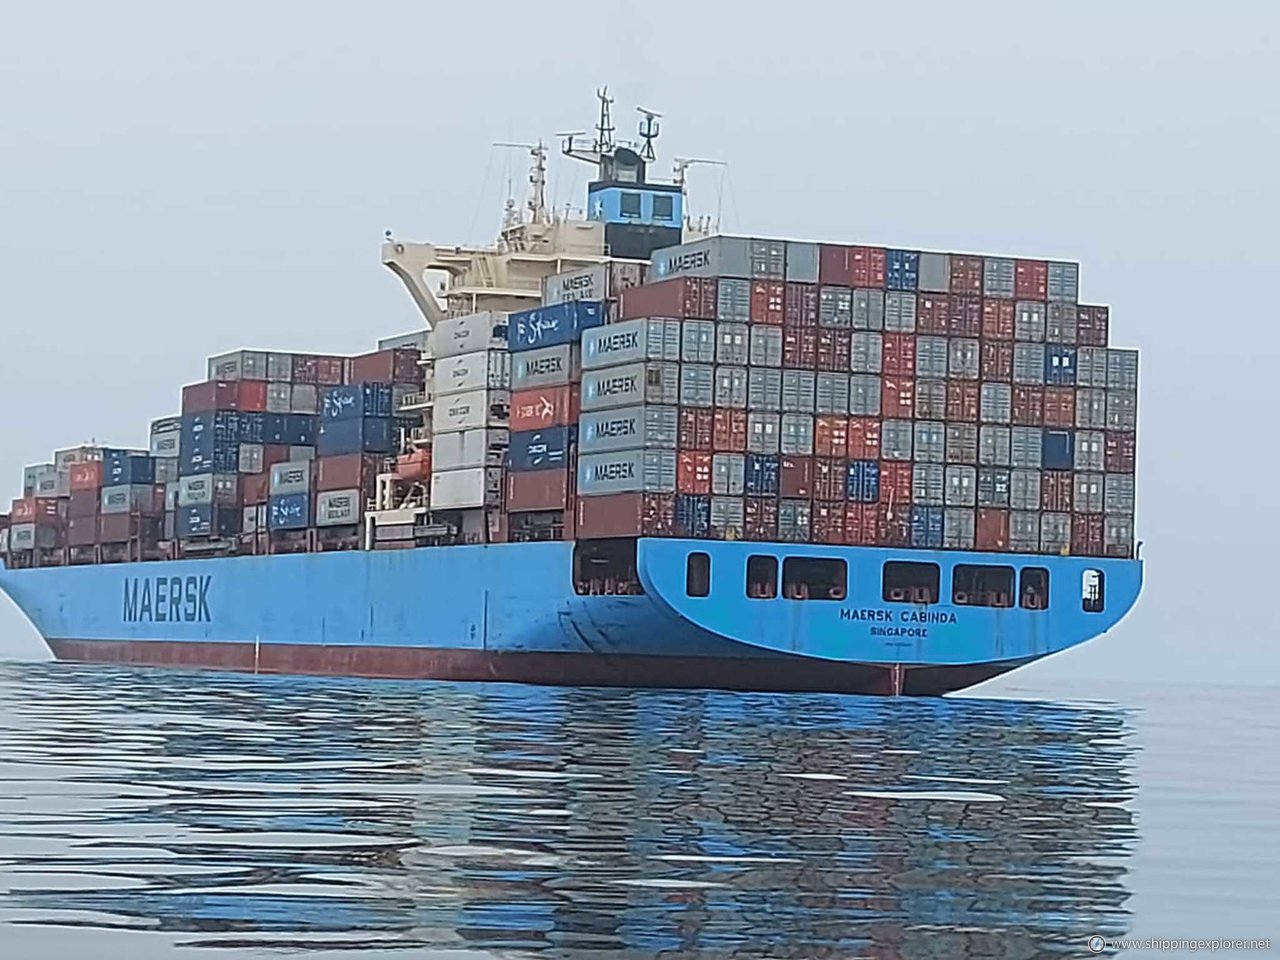 Maersk Cabinda